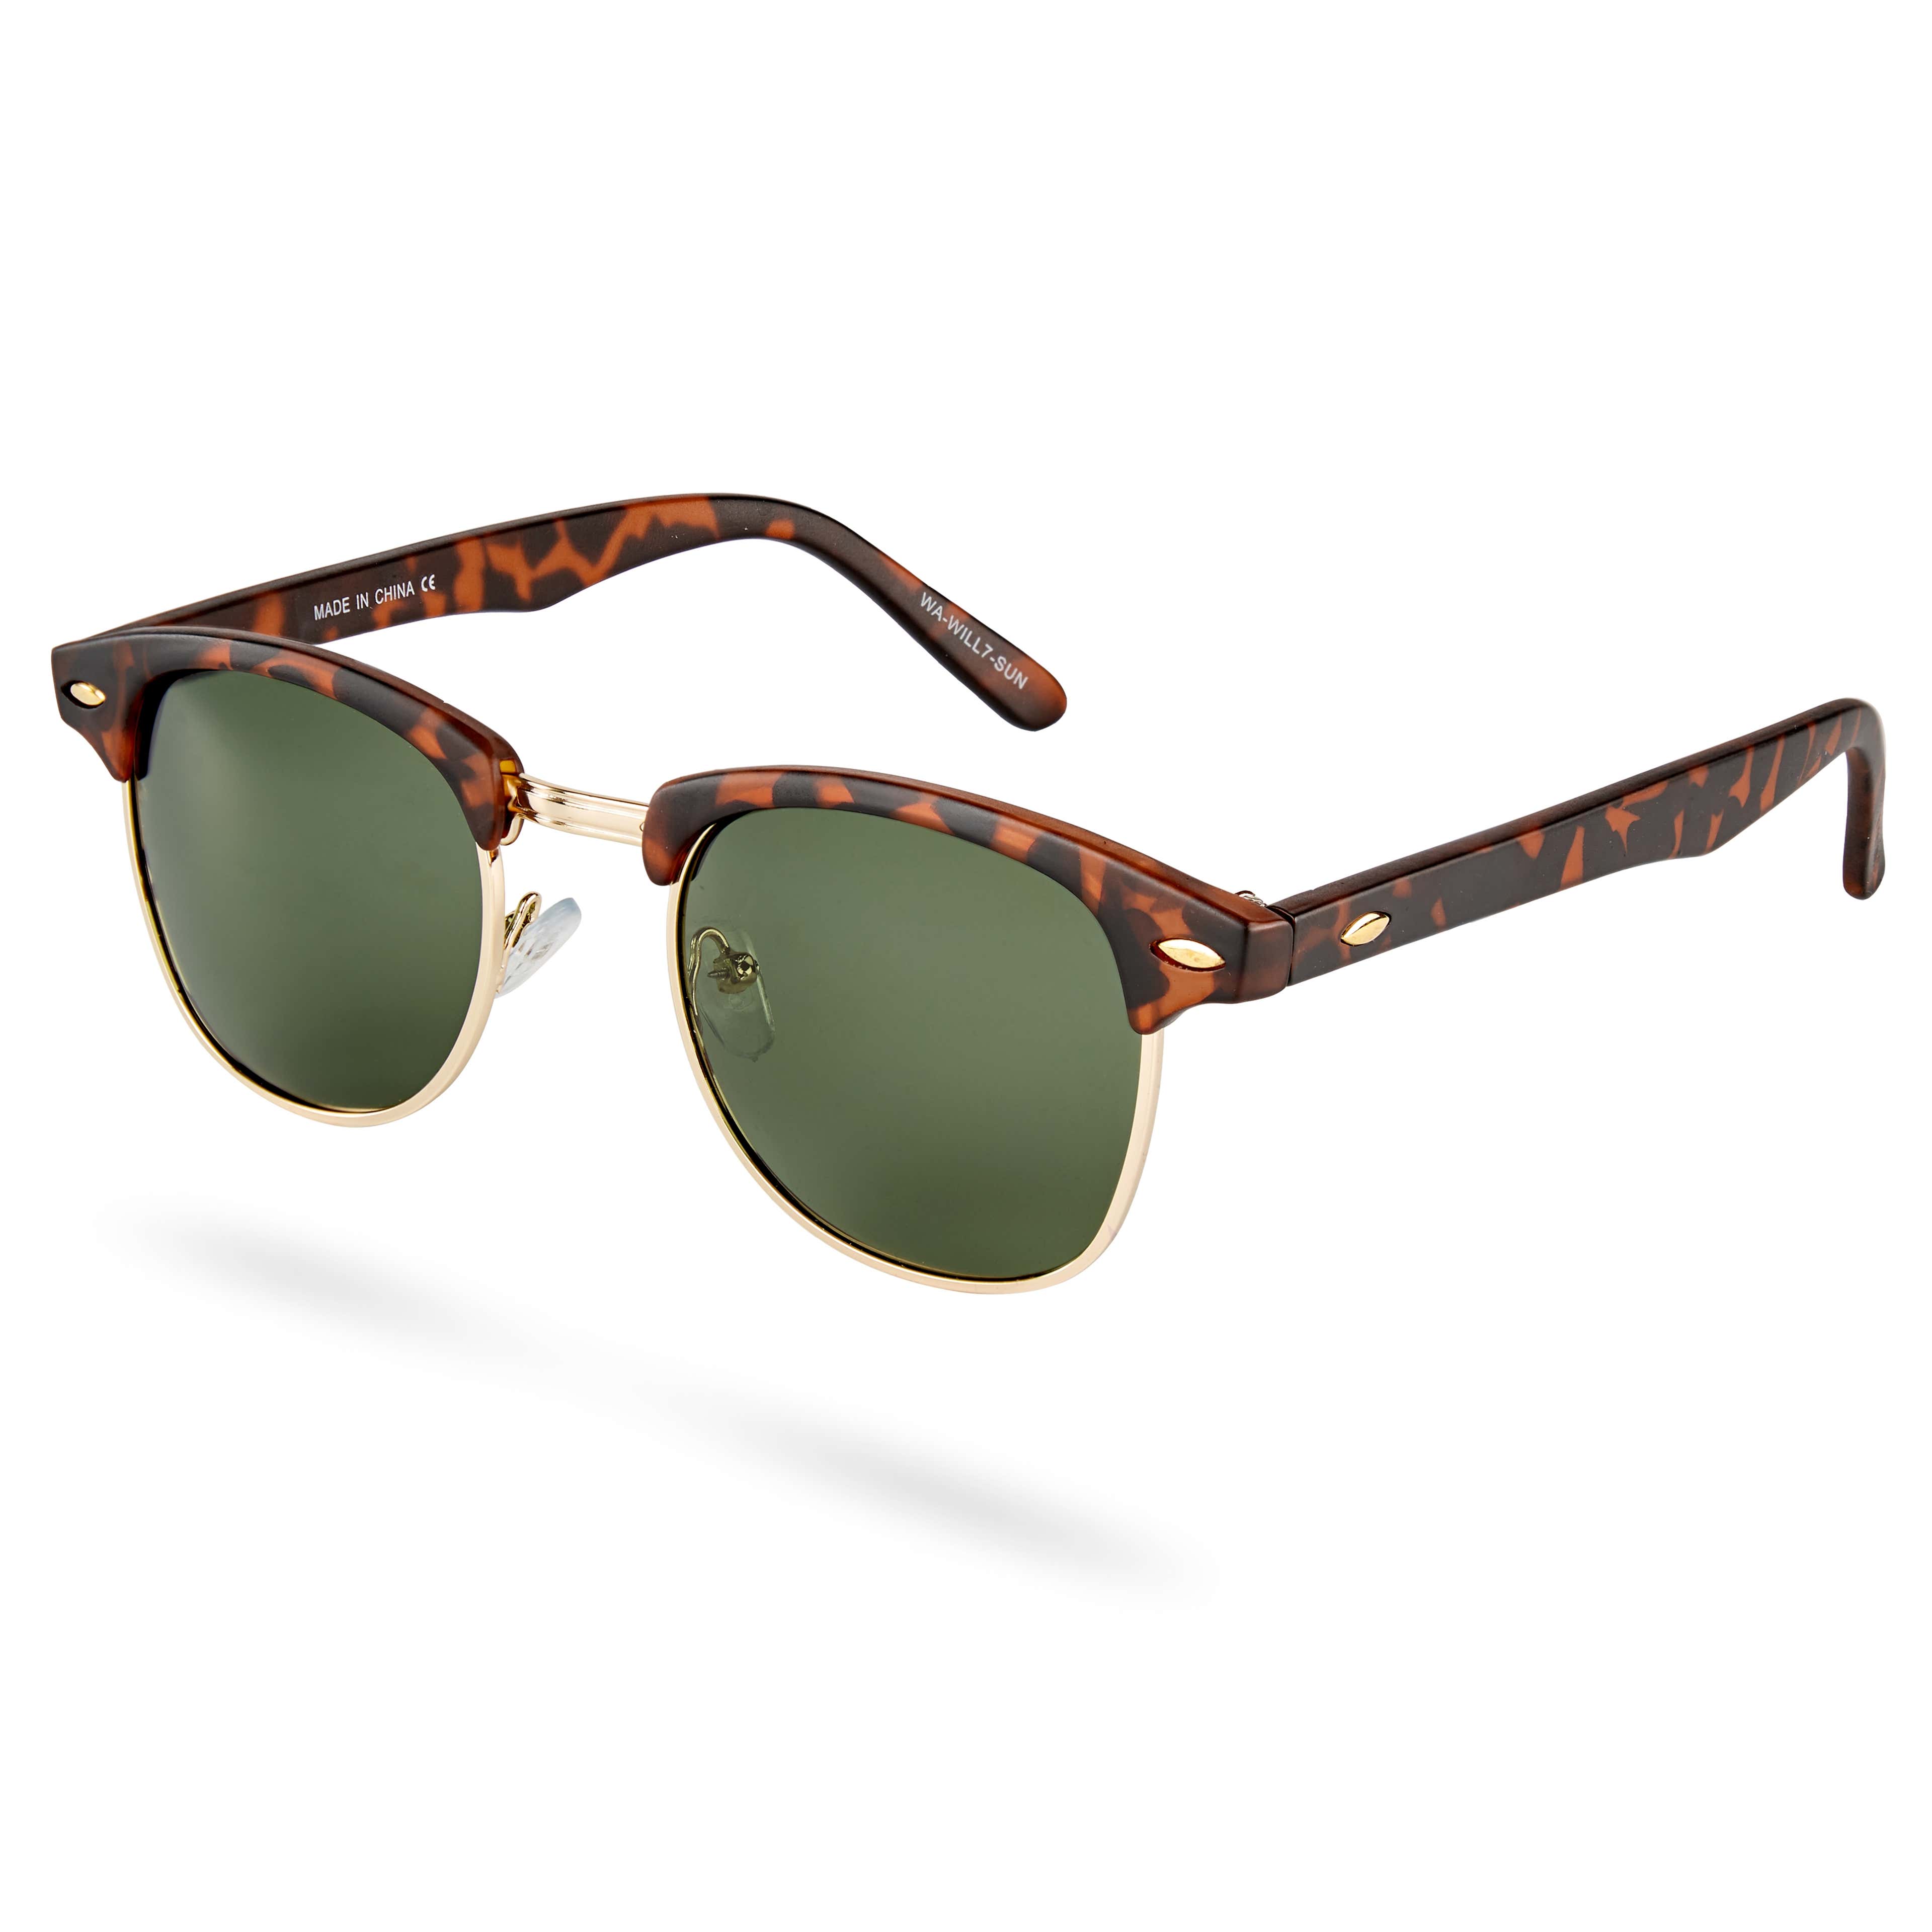 Will Tortoiseshell & Green Vista Sunglasses